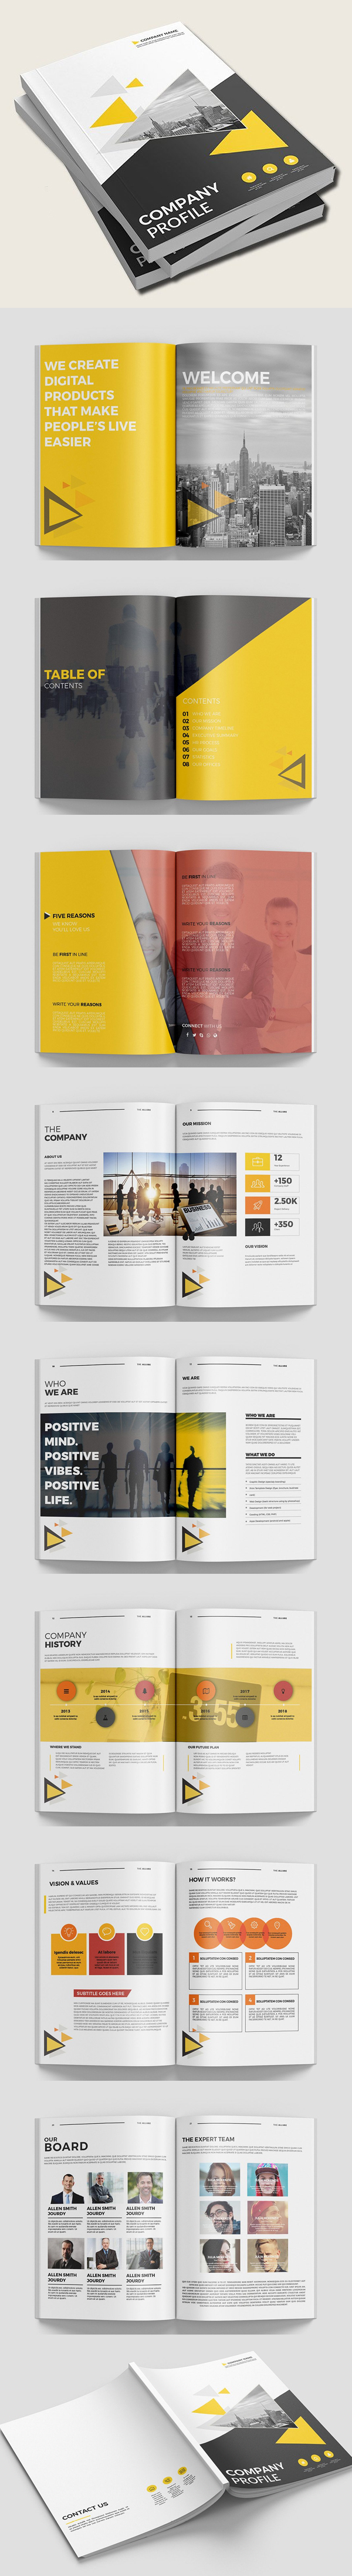 100 Professional Corporate Brochure Templates - 48